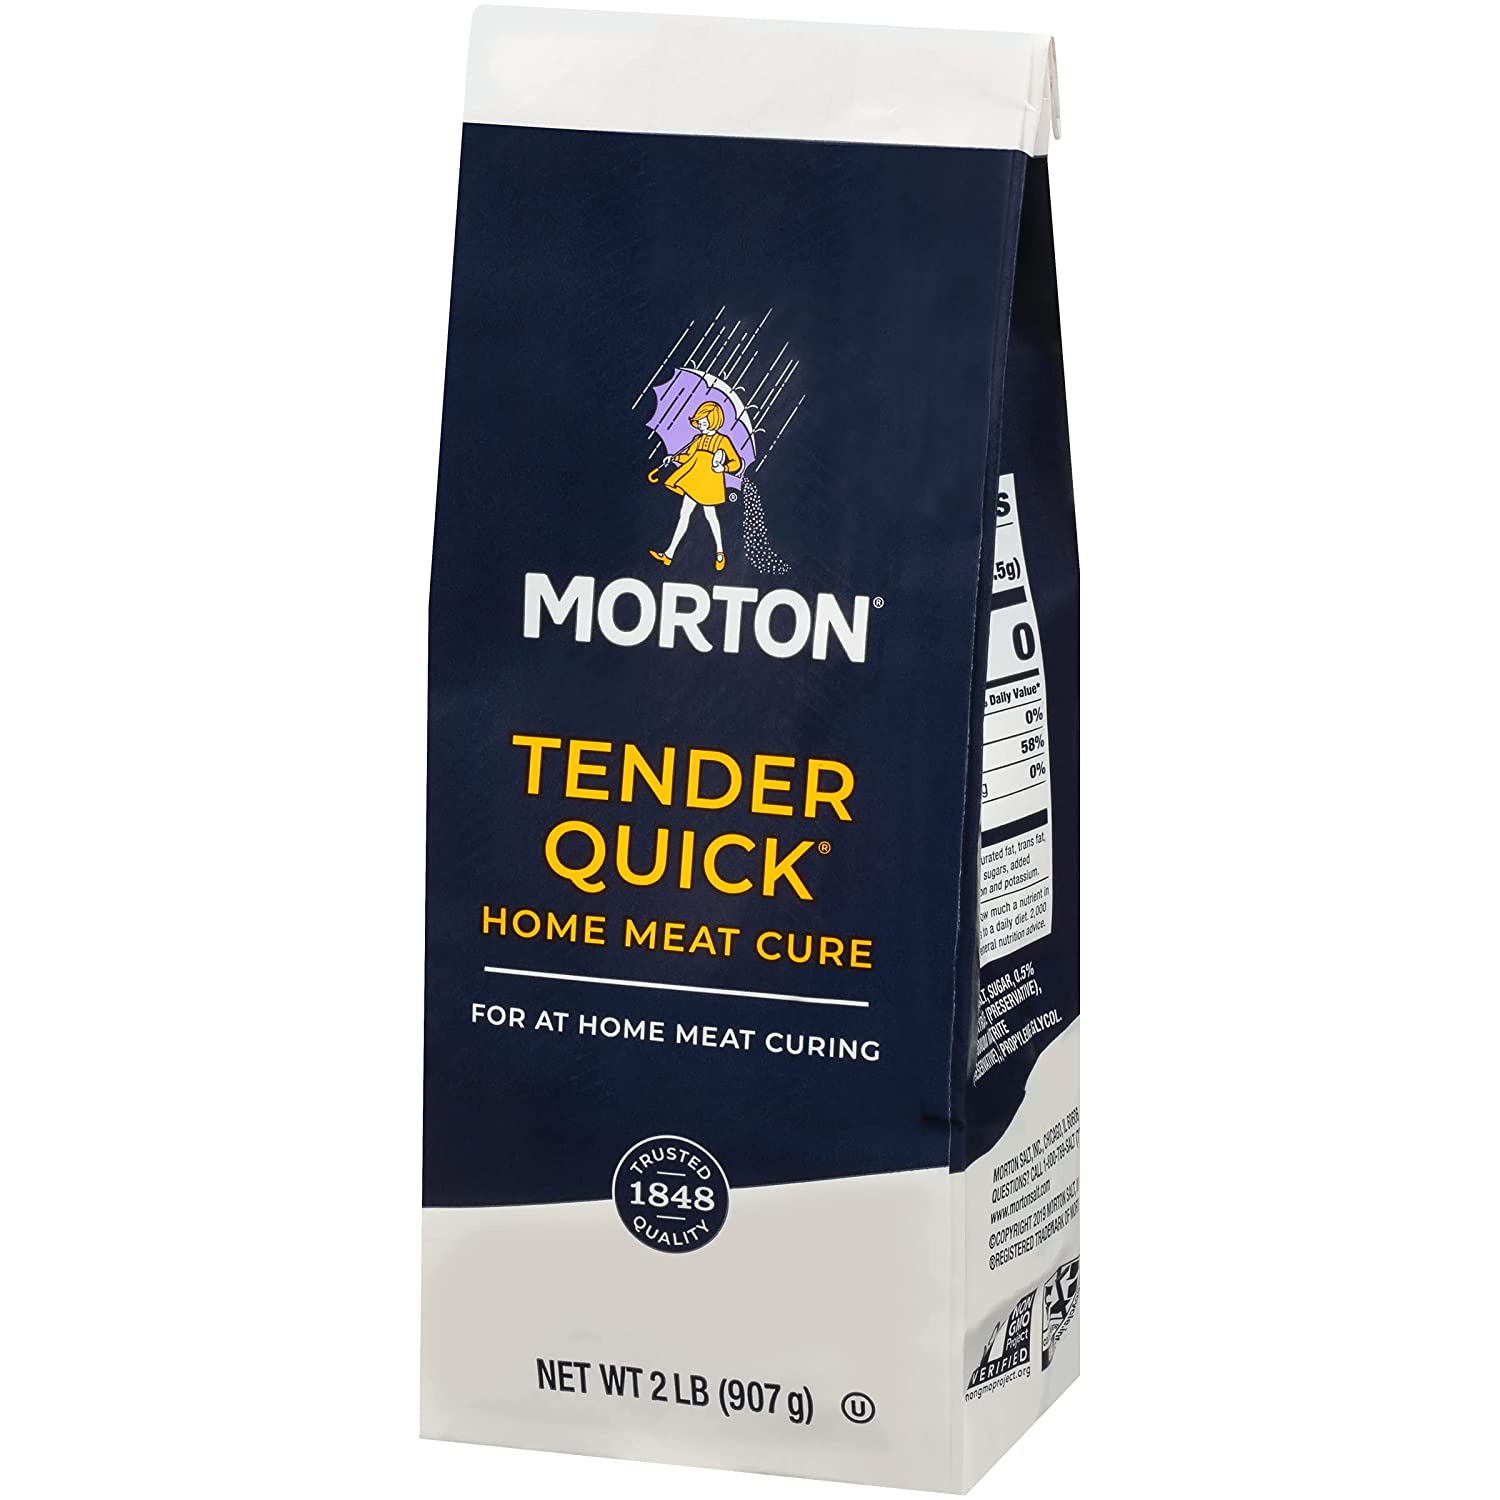 Morton Nature's Seasons Seasoning Blend, 7.5 Ounce (2 pack) w/Custom CMC  Measuring Spoon 1tbsp & 1tsp